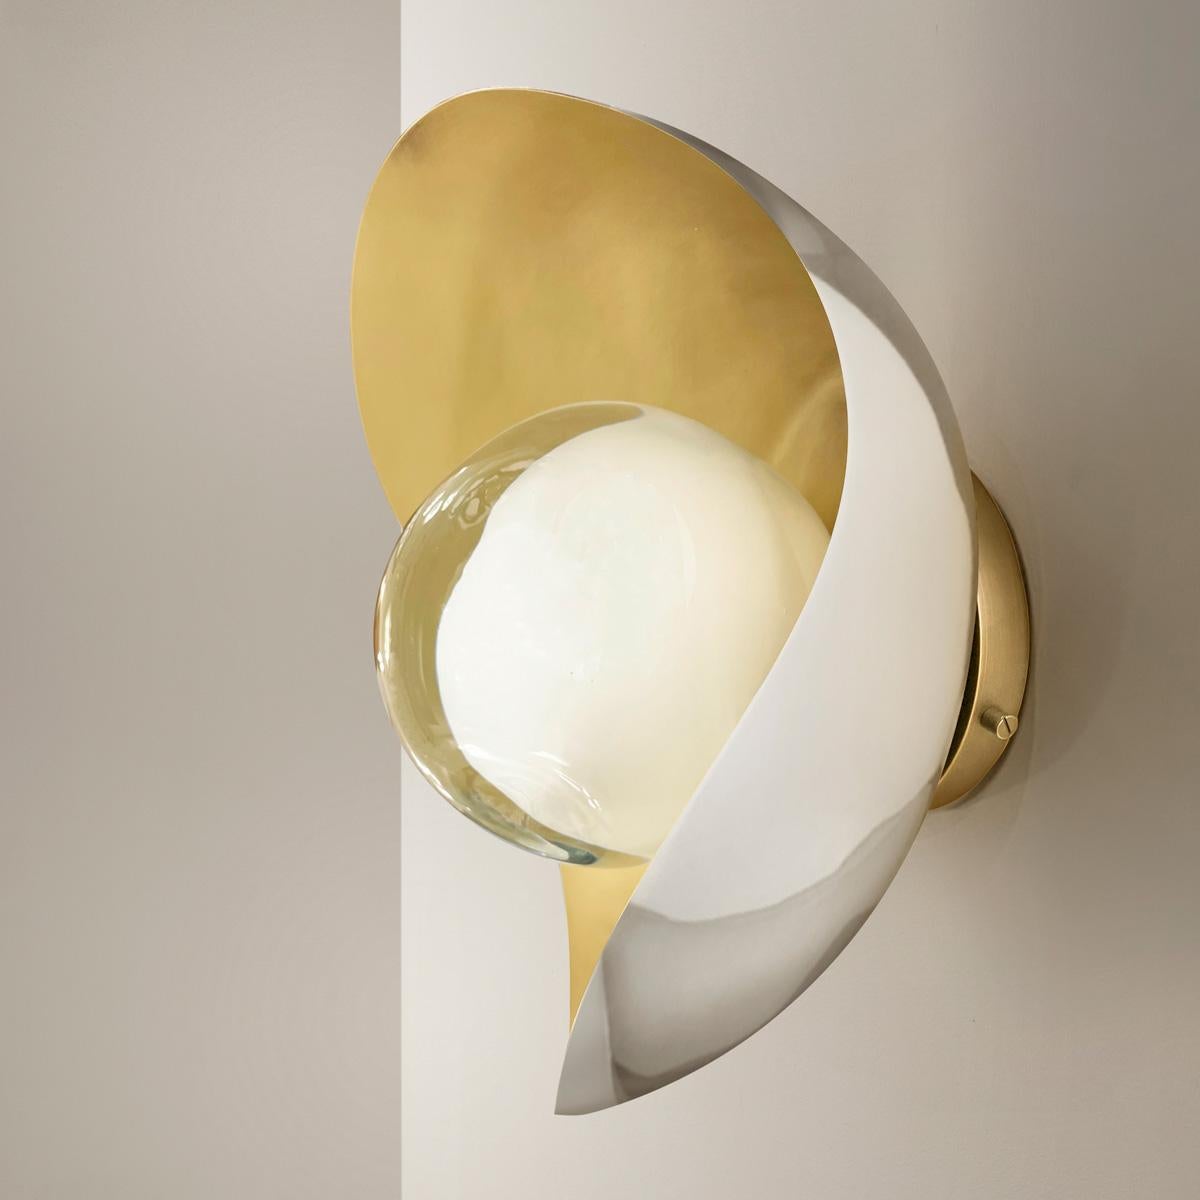 Perla Wall Light by Gaspare Asaro-Satin Brass/Acqua Finish For Sale 3